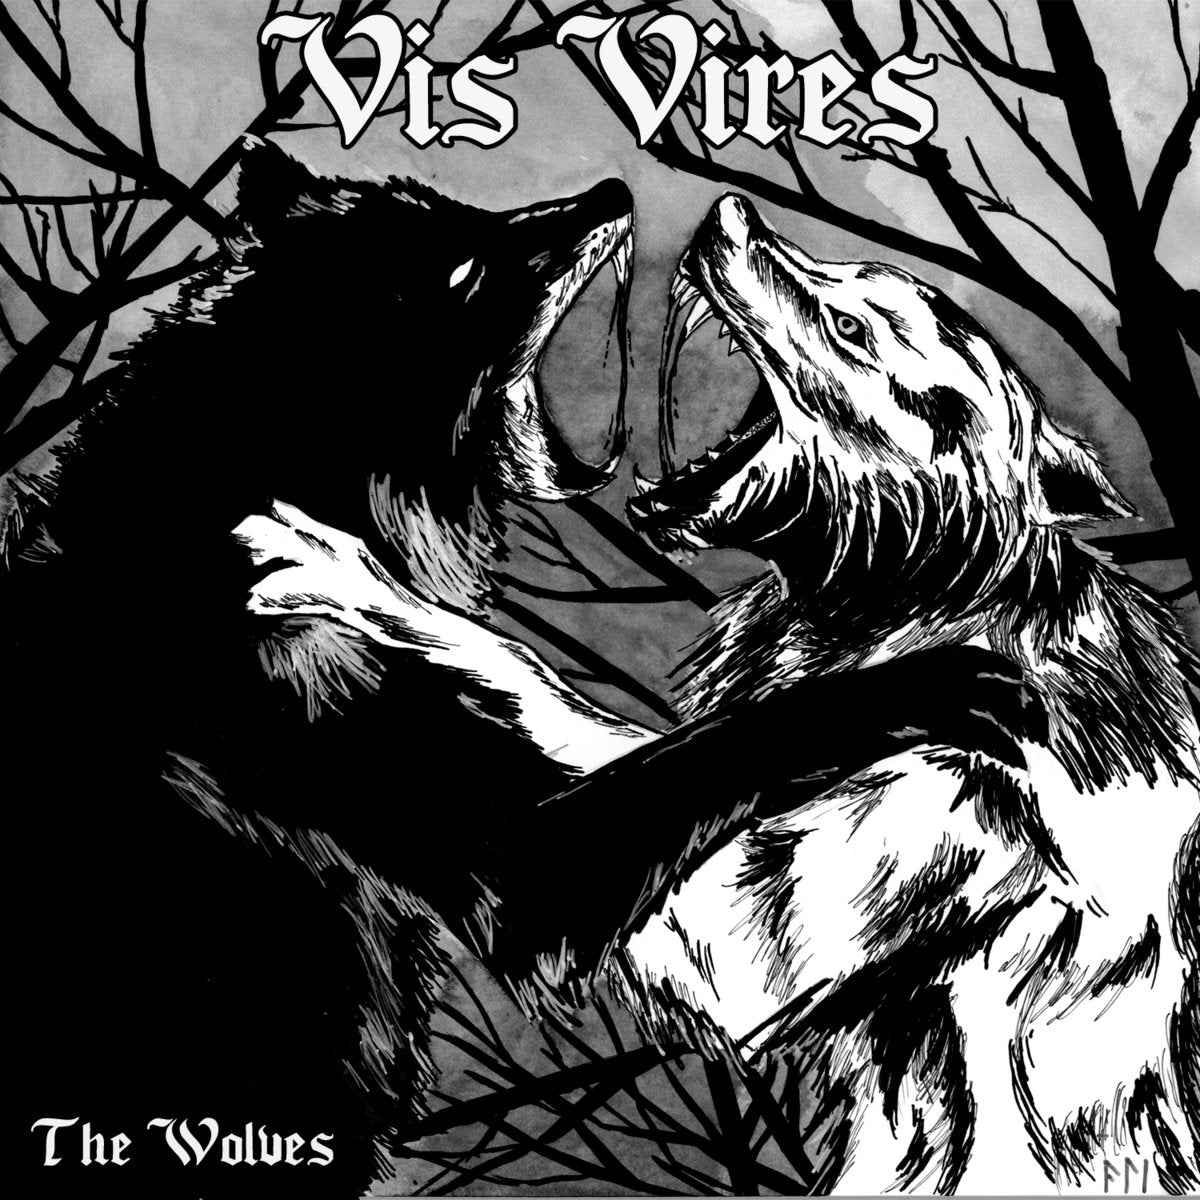 VIS VIRES - THE WOLVES Cassette EP